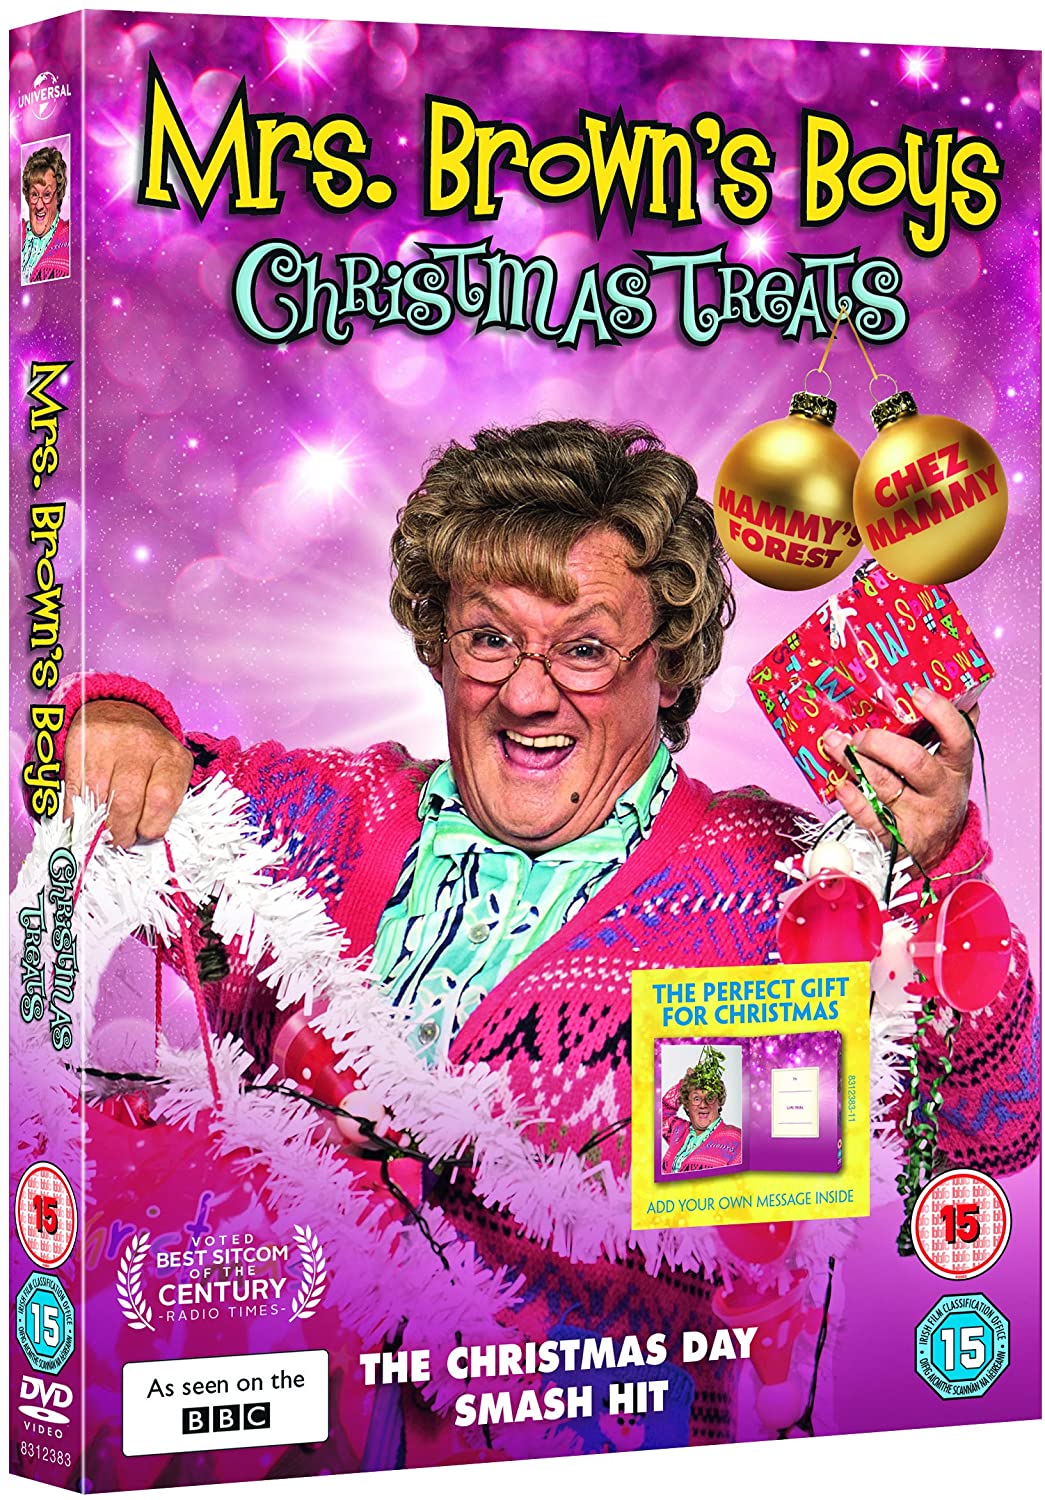 Mrs. Brown's Boys - Christmas Treats [2017] [DVD]